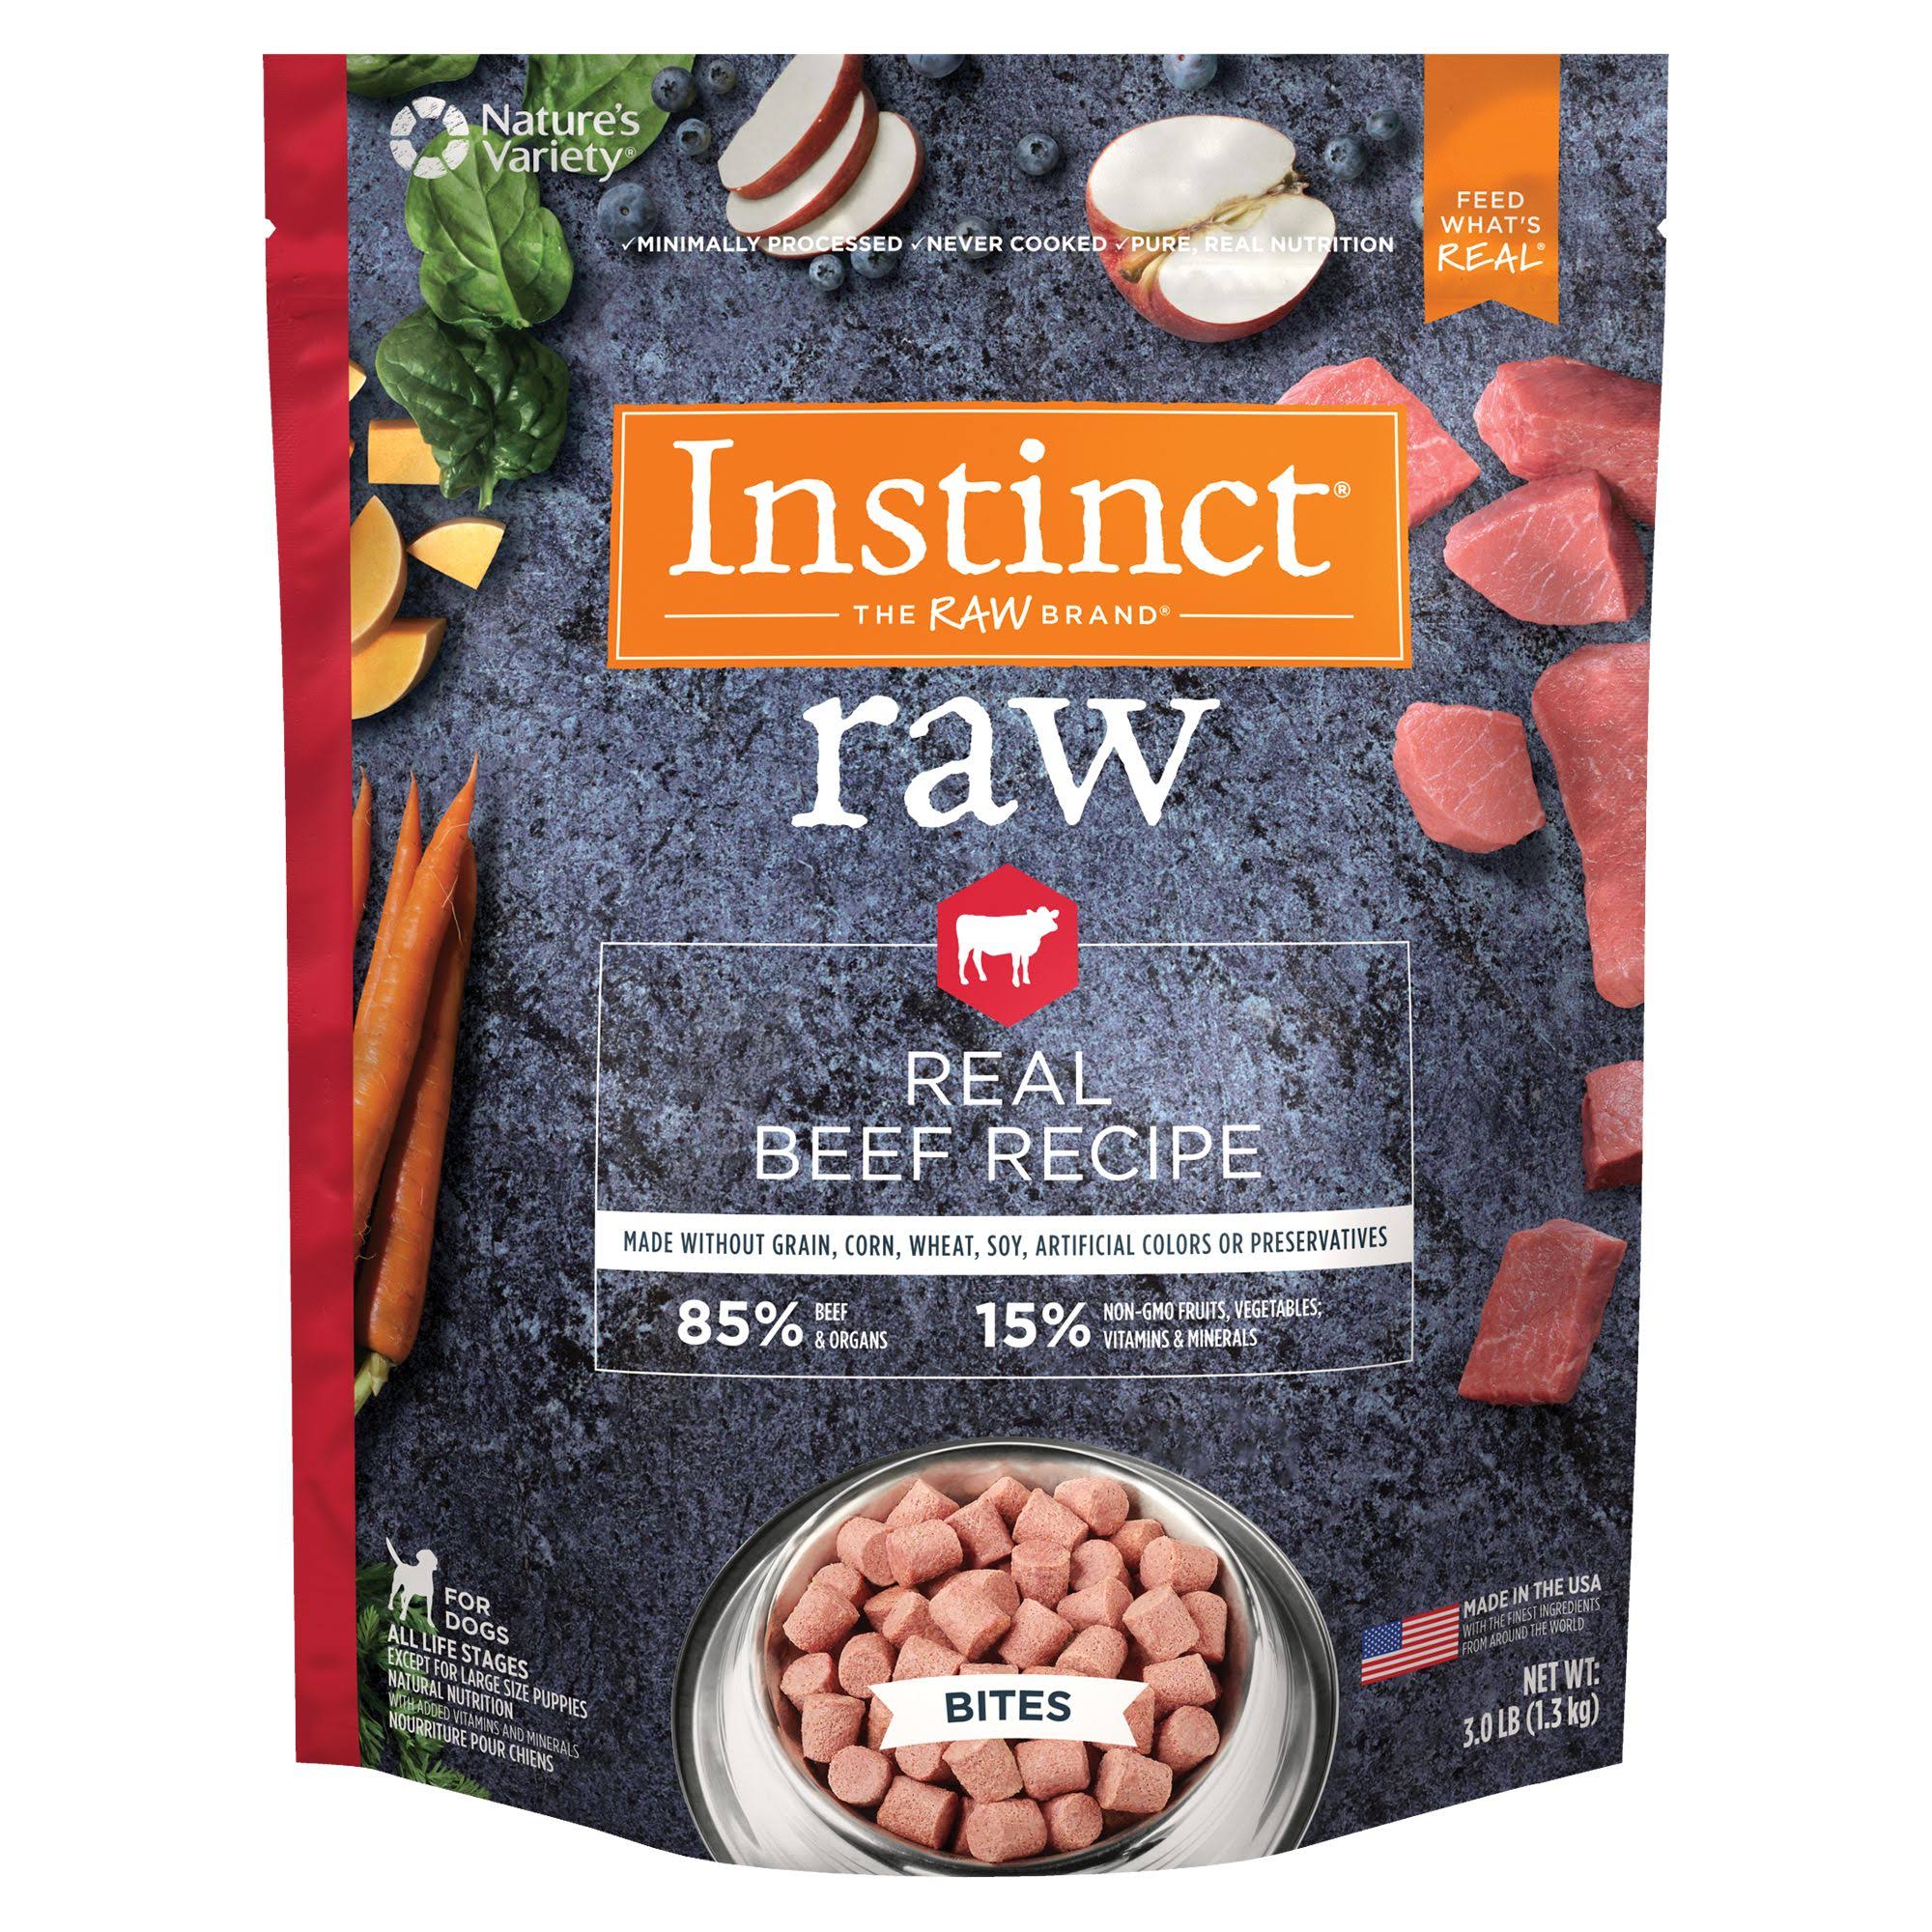 Instinct Frozen Raw Bites Grain-Free Real Beef Recipe Dog Food, 3 lbs.